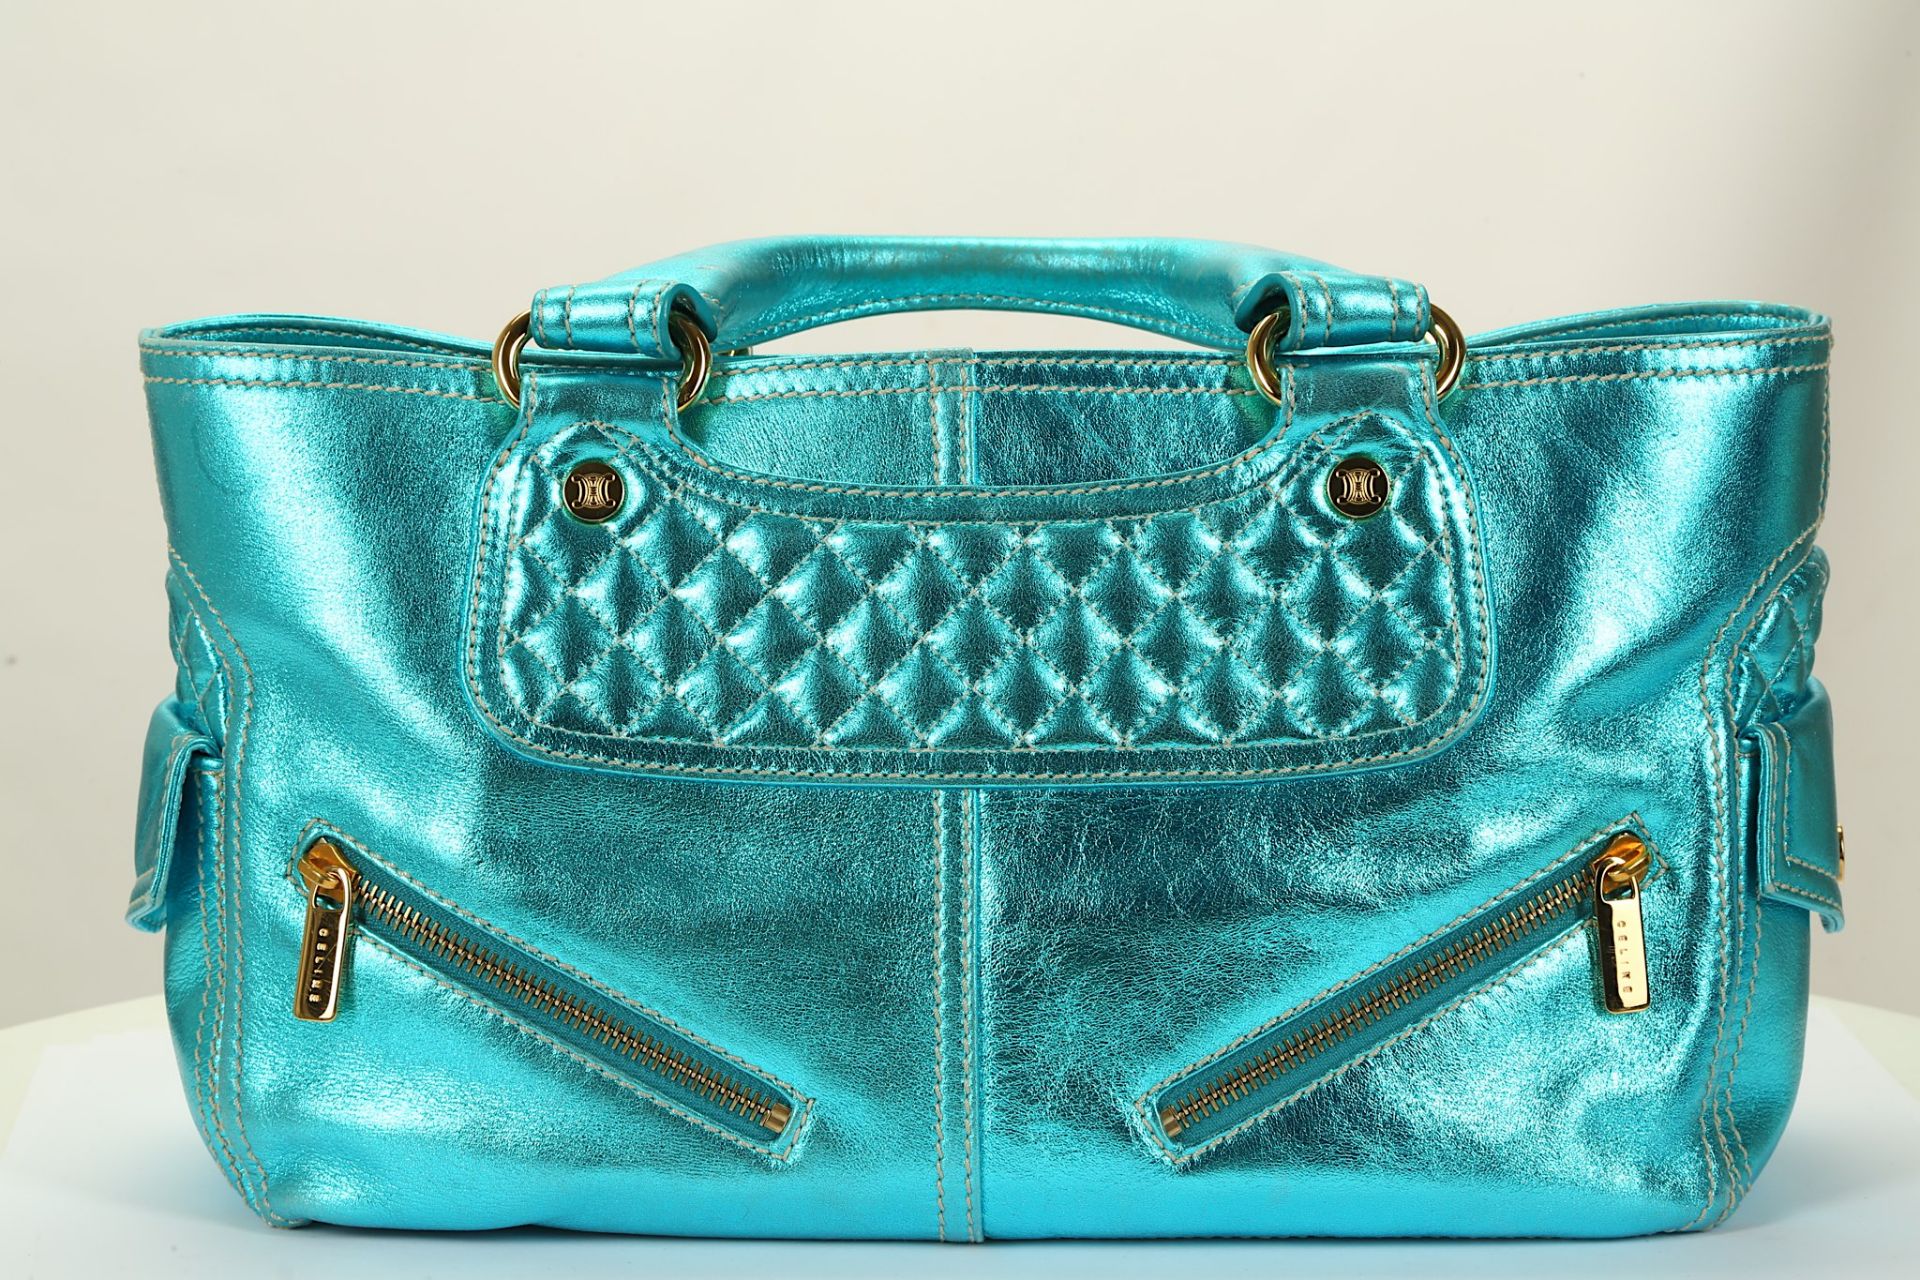 Celine Iridescent Blue Stitched Boogie Bag, gold t - Image 4 of 7